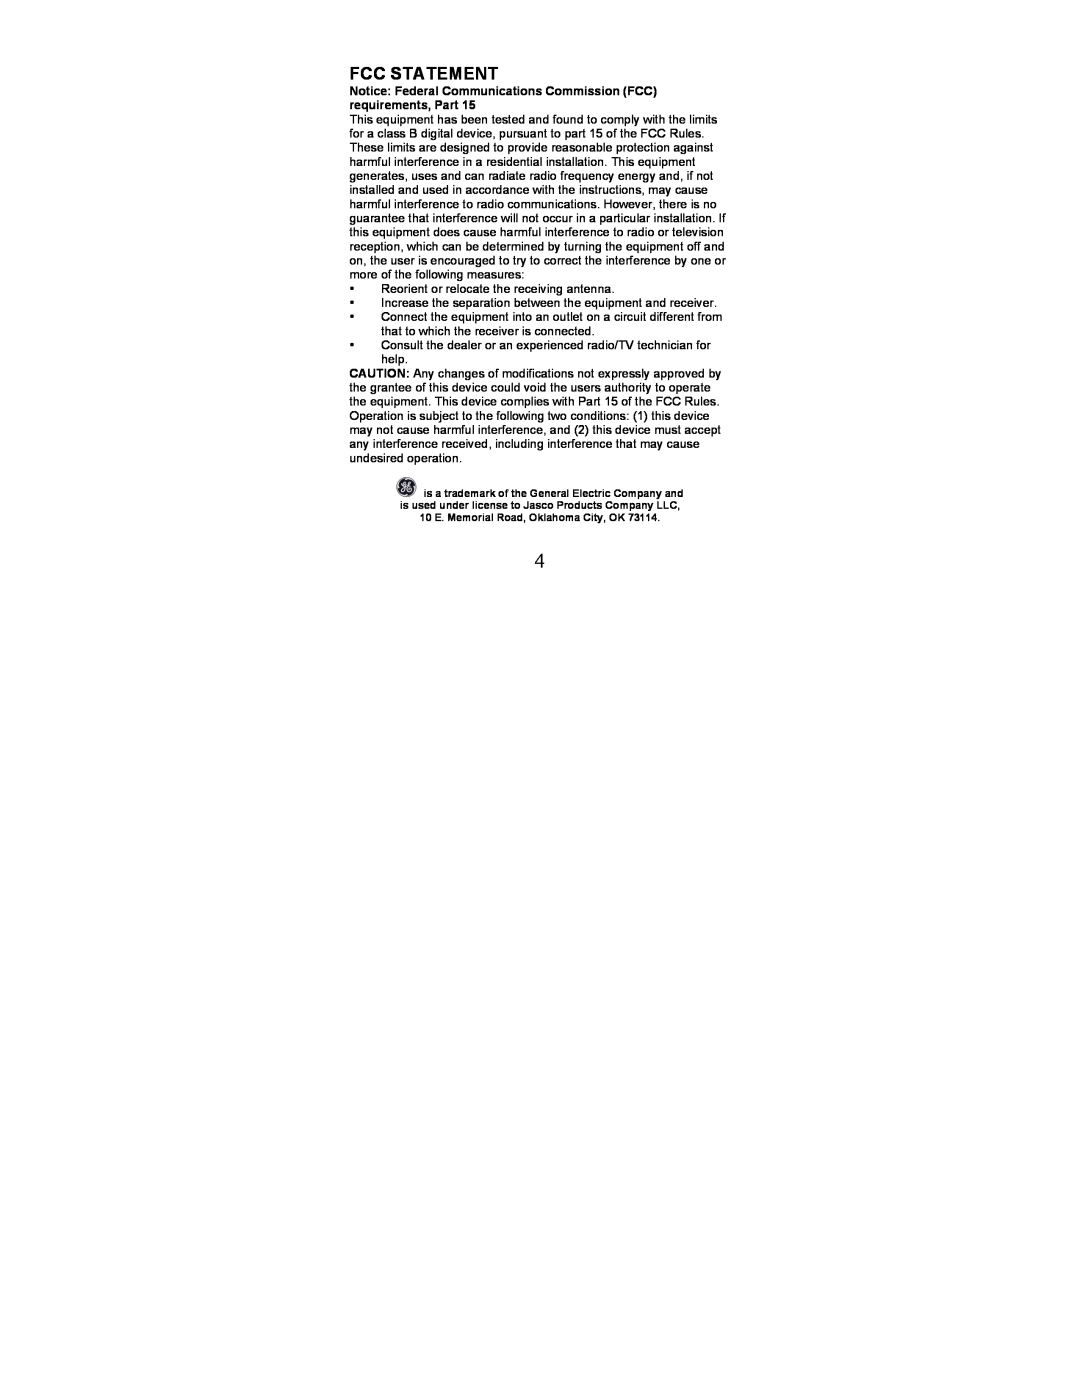 Jasco 98529 instruction manual Fcc Statement, Notice Federal Communications Commission FCC requirements, Part 